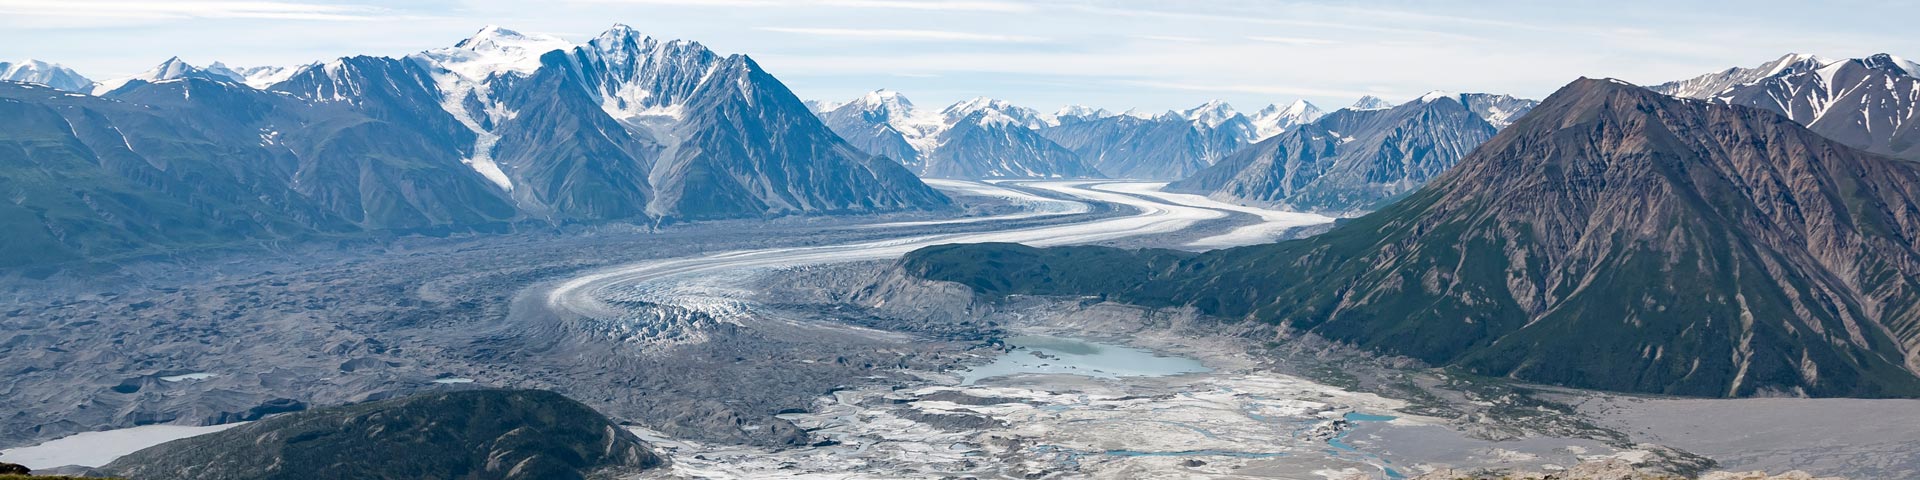 View of Kaskawulsh glacier in Kluane National Park and Reserve